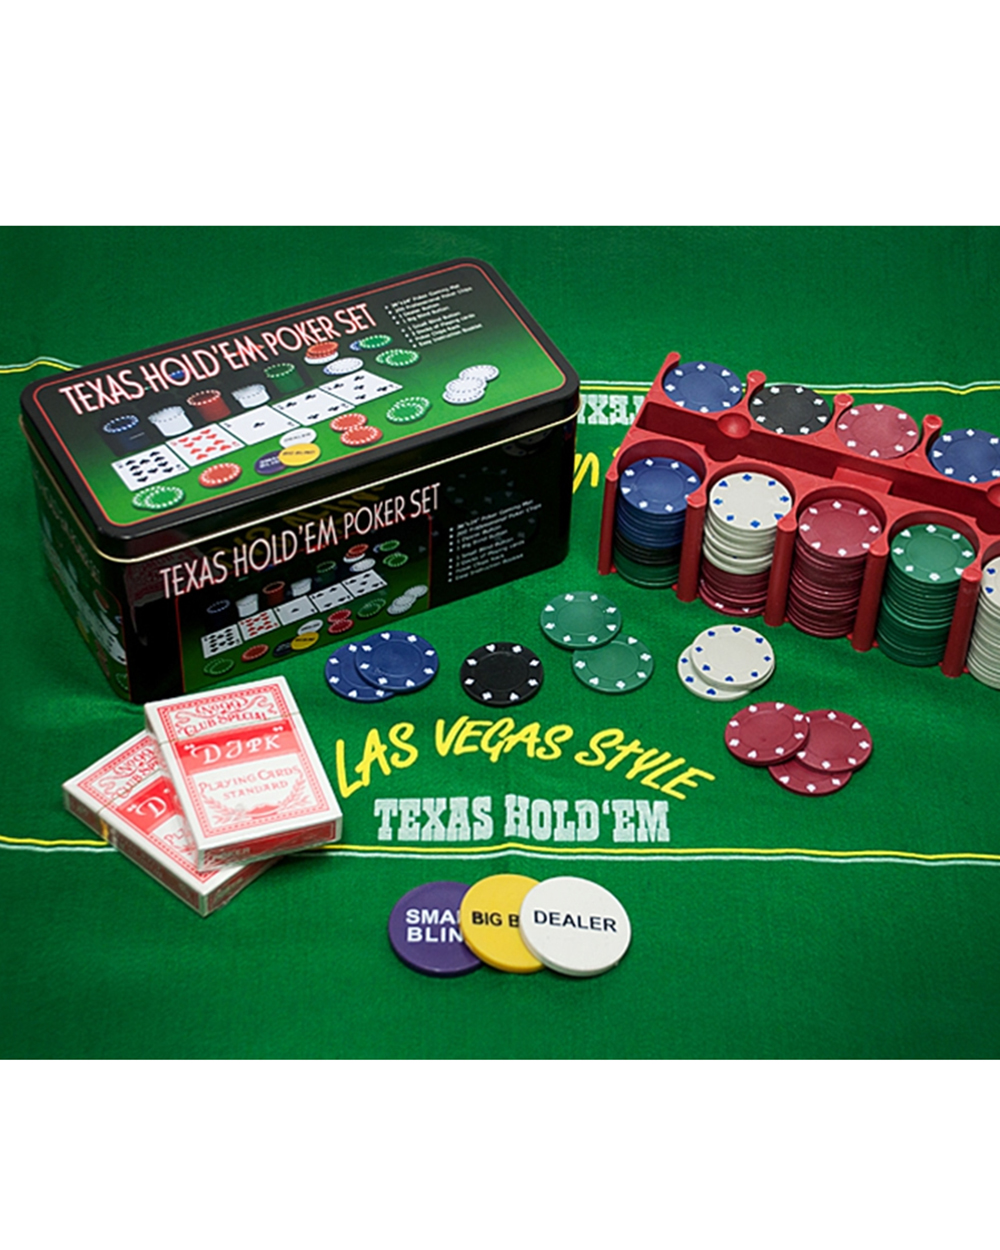 Texas Hold'em poker set, US$13.95, from Amazon. https://www.amazon.com/Texas-Hold-em-Poker-Set/dp/B00AQ7JBRA